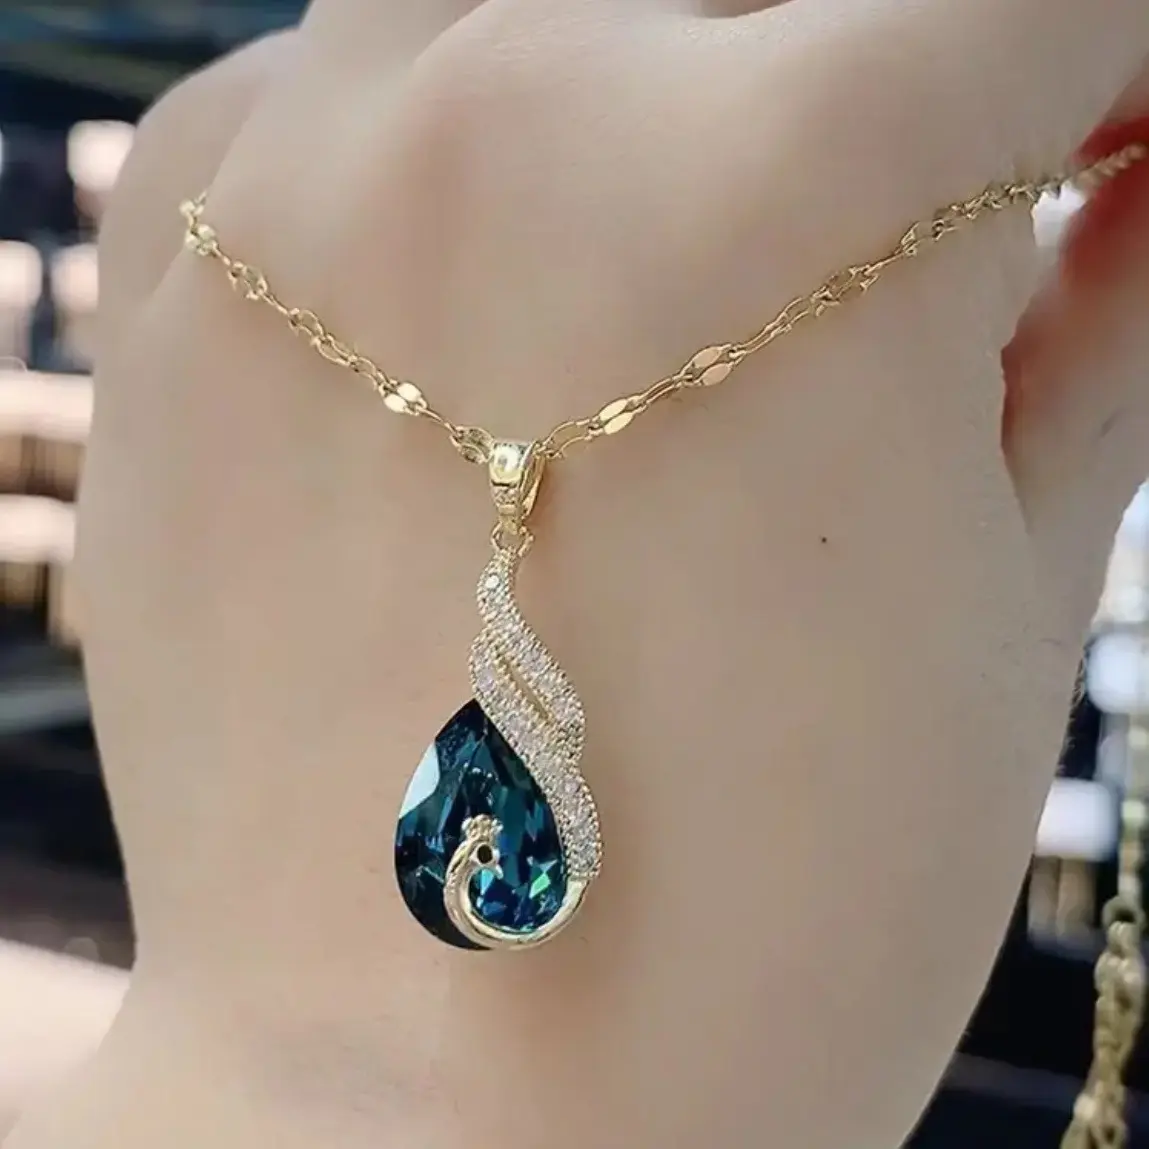 Perhiasan Fashion kalung perhiasan Bohemian Boho berlapis emas anting menjuntai panjang kristal kaca biru segi